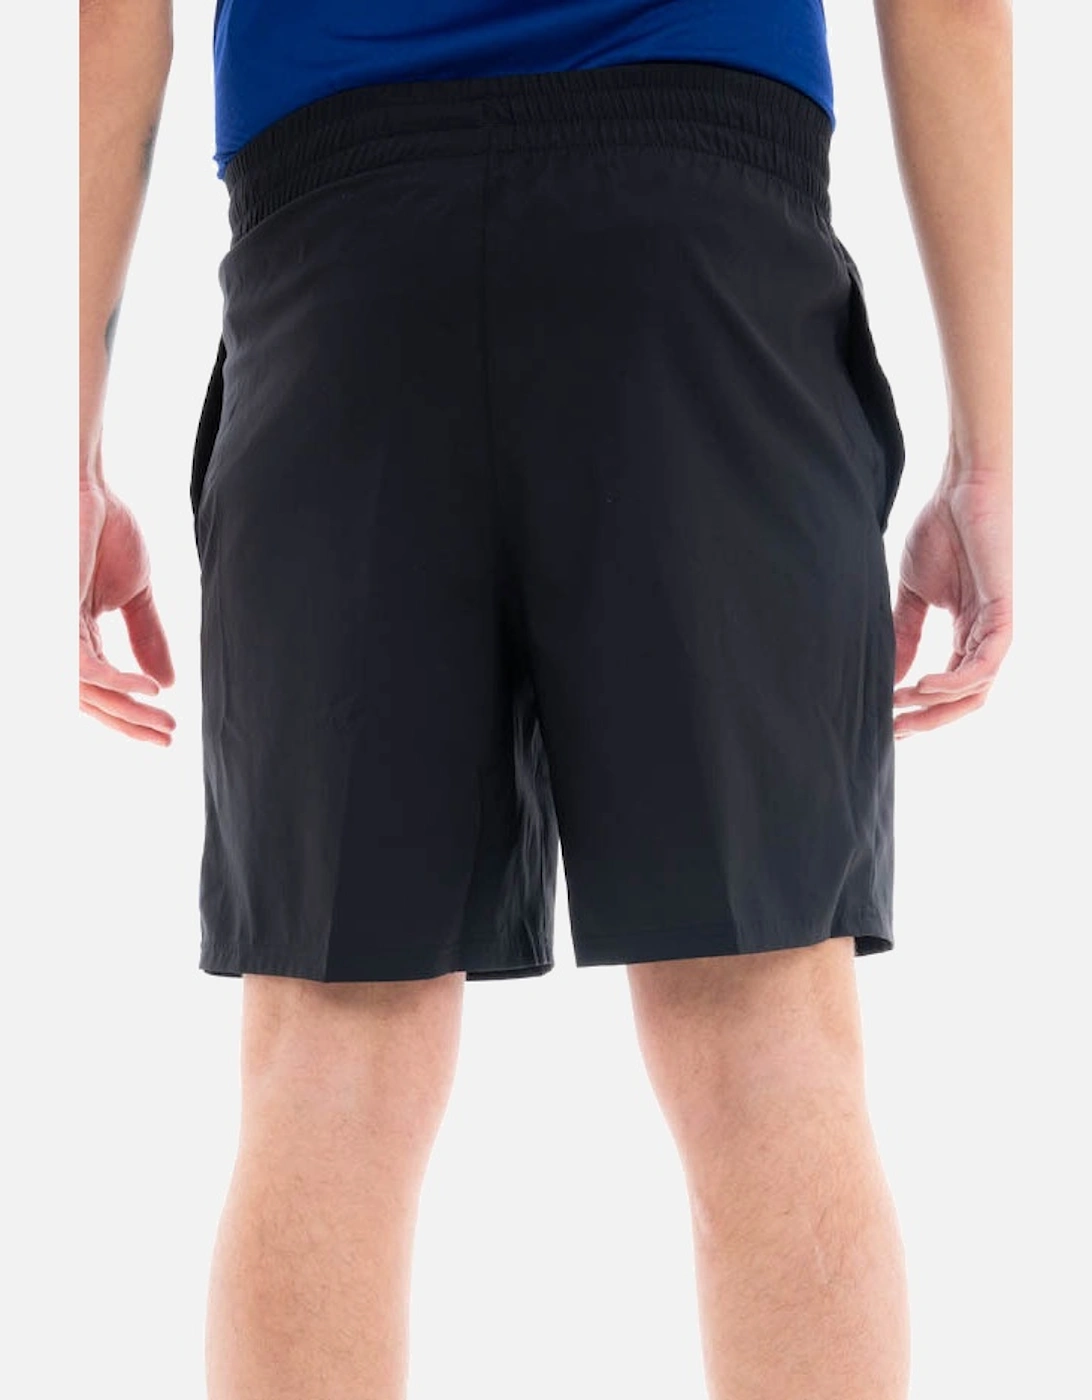 Mens Training Blaster Shorts (Black)